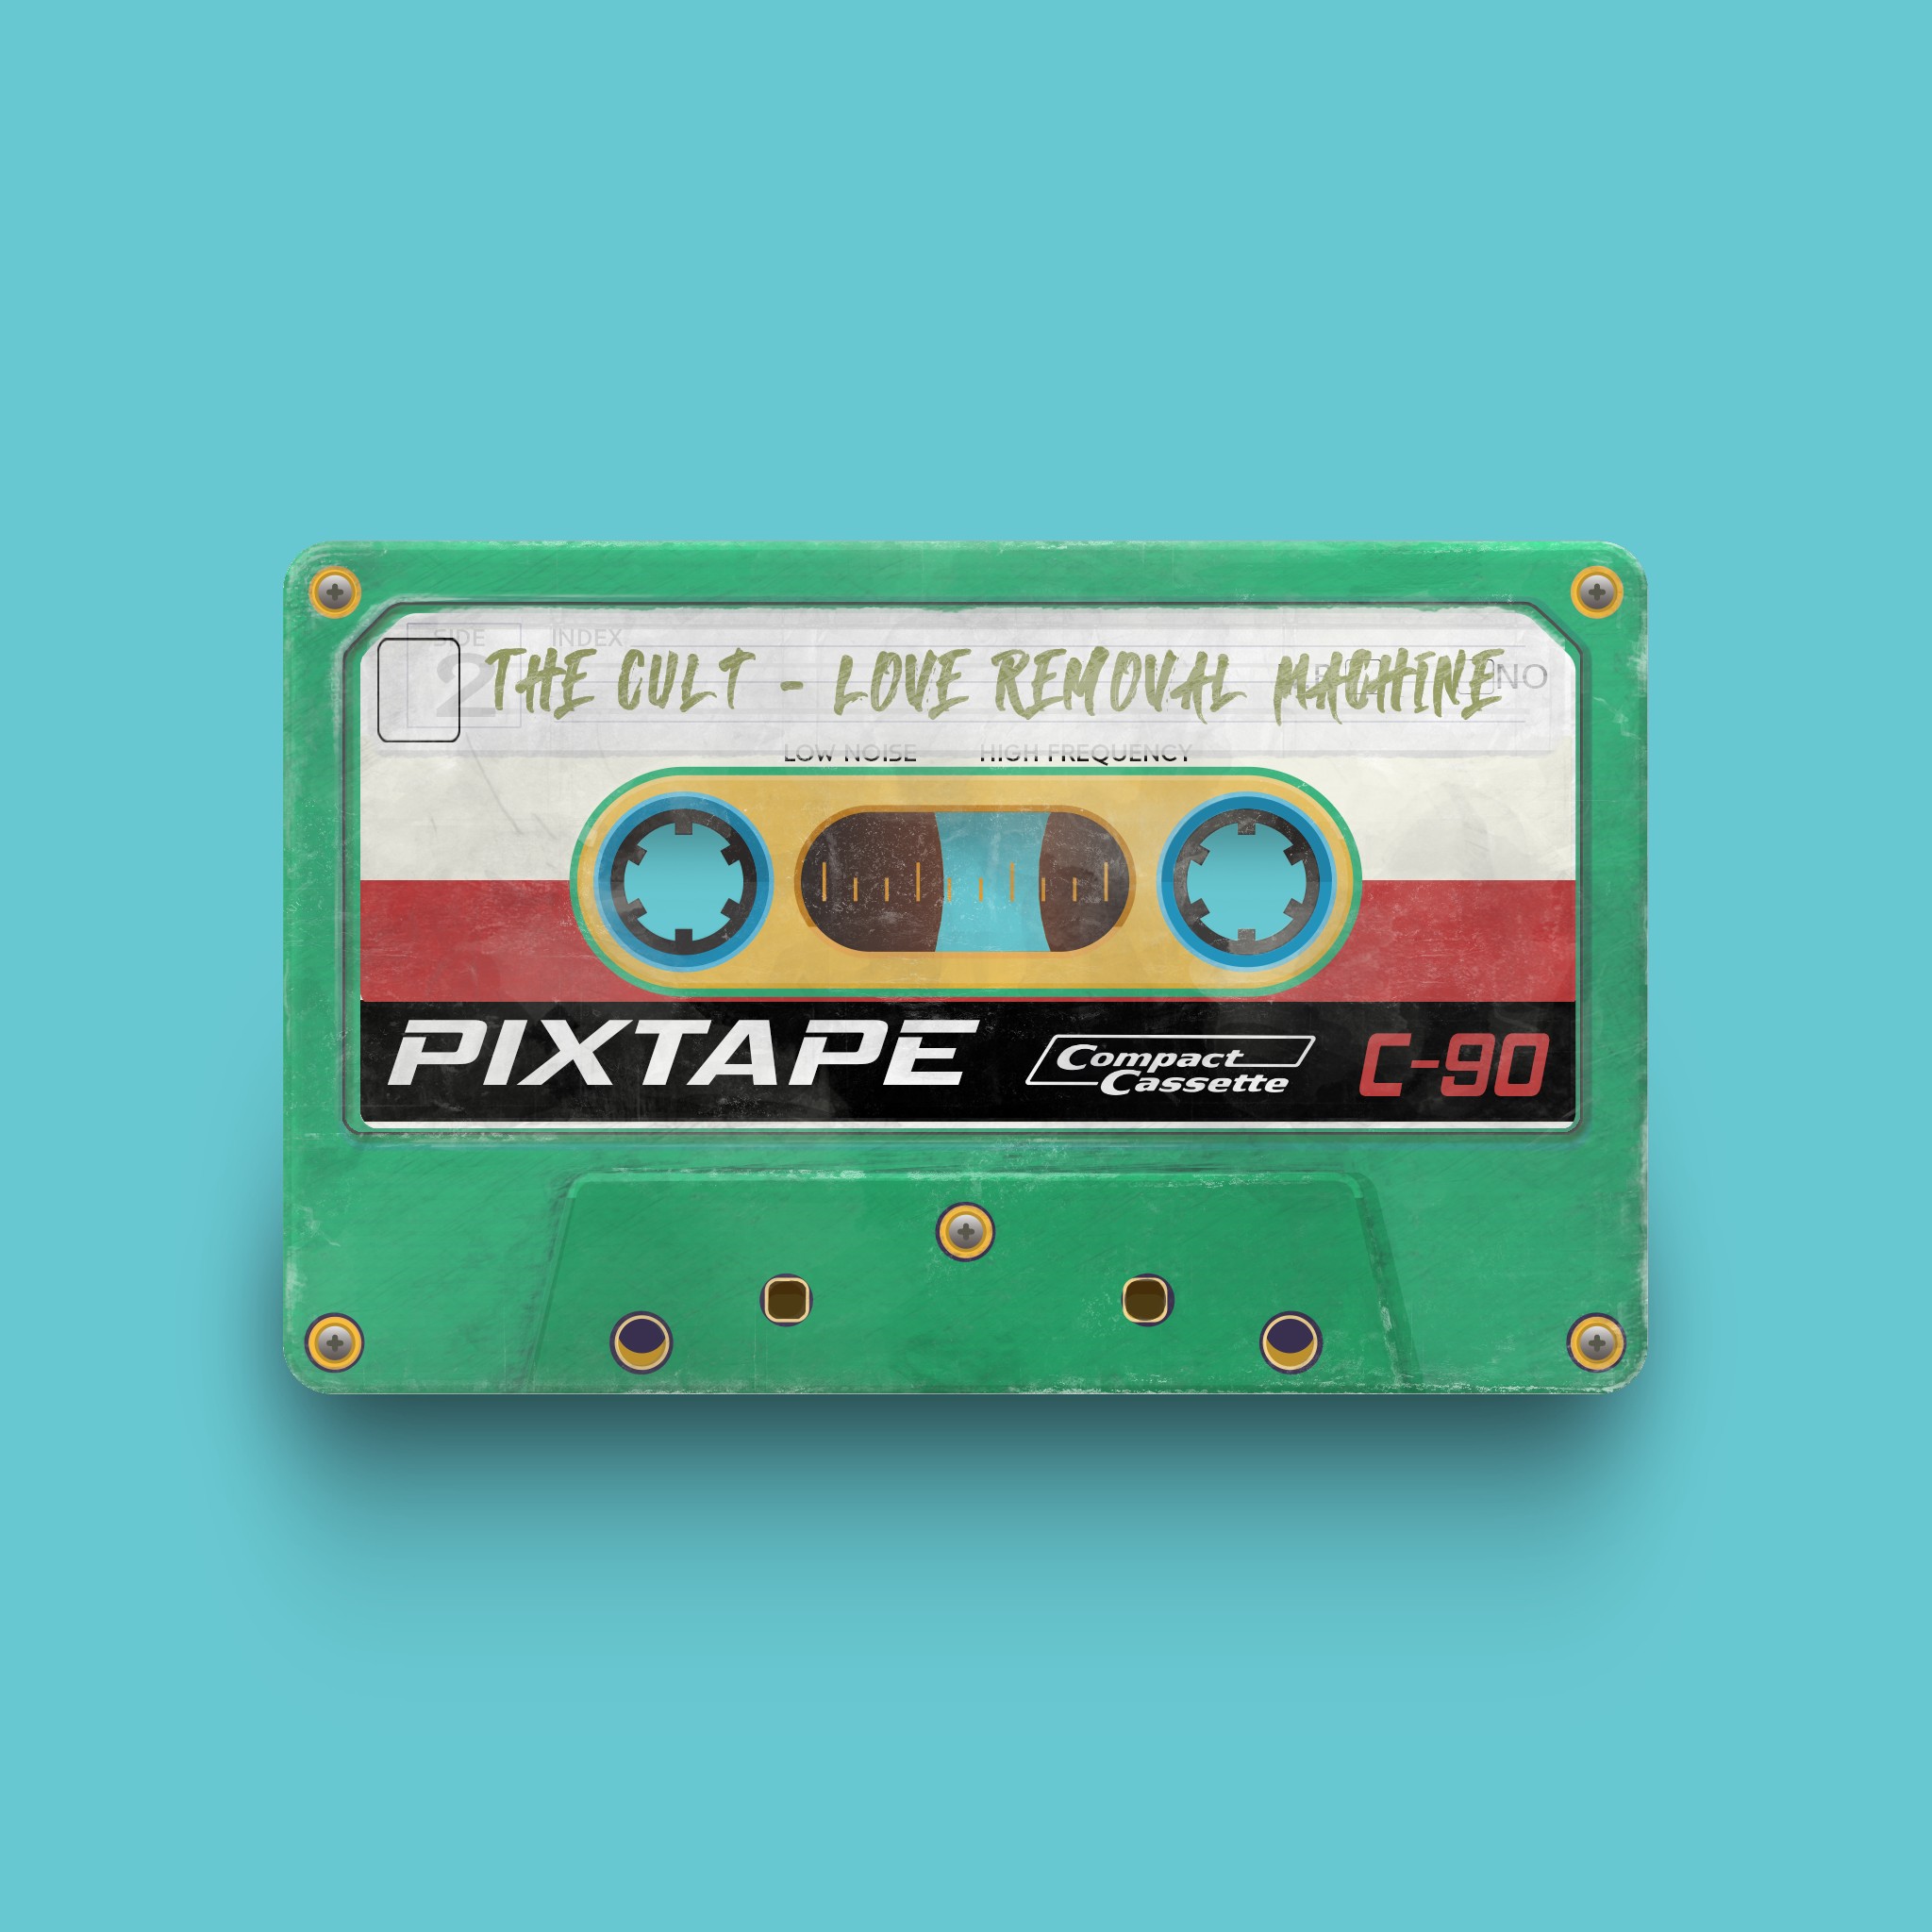 PixTape #8 | The Cult - Love Removal Machine